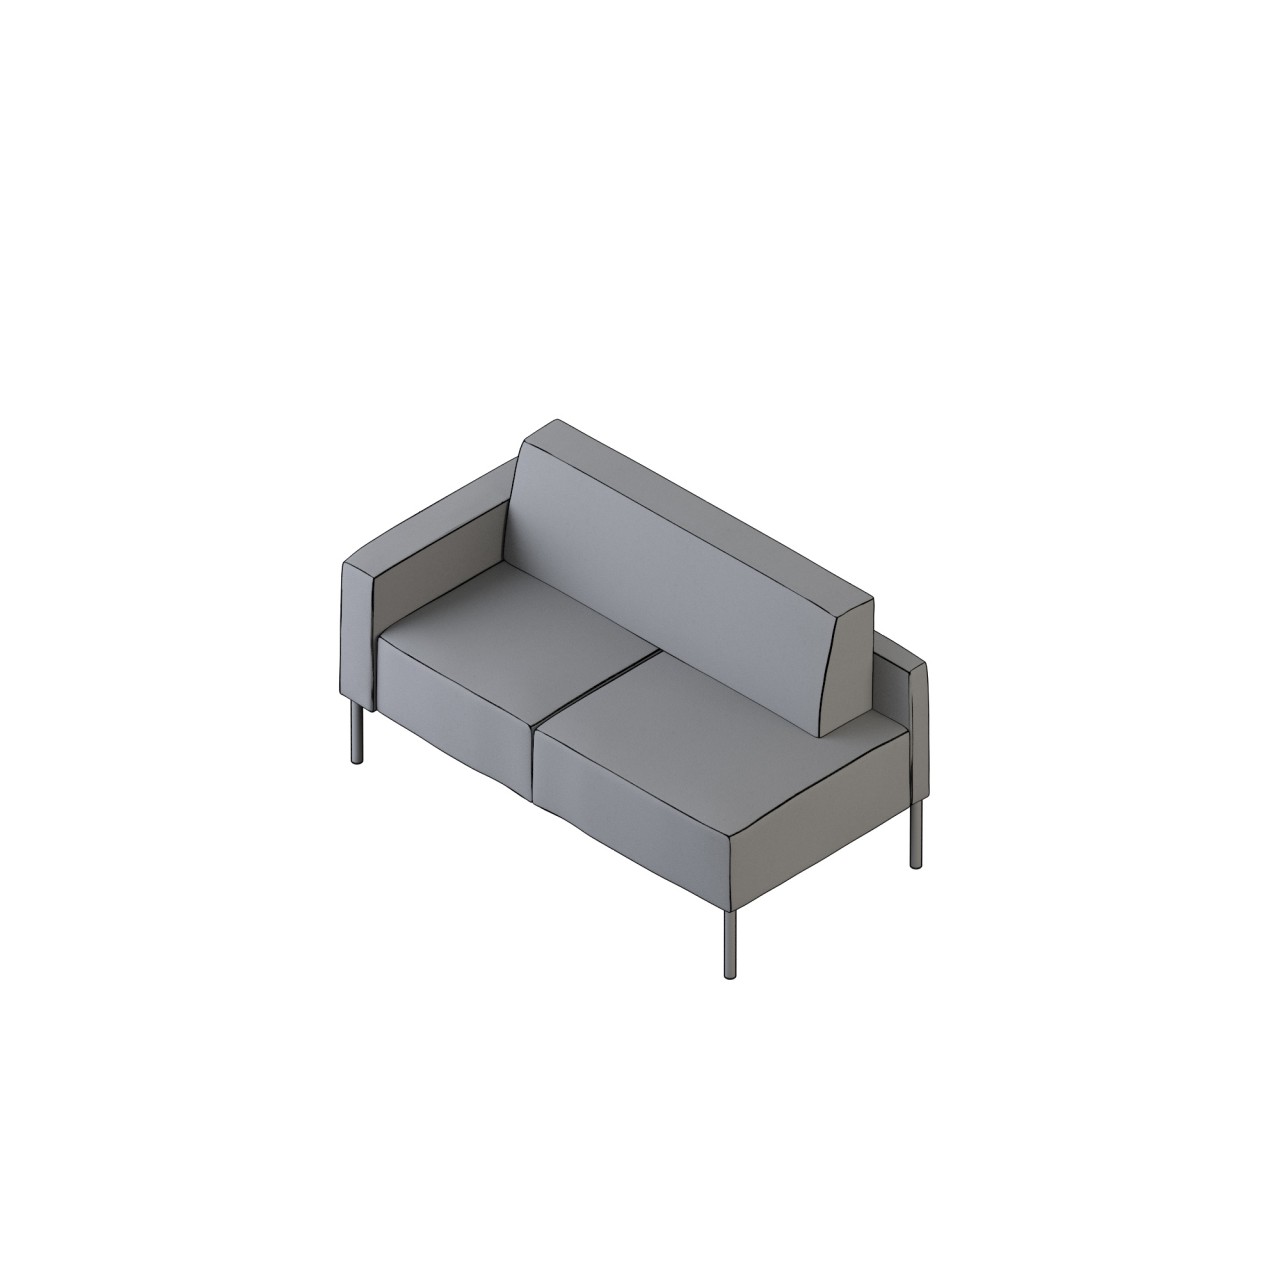 mozzo lounge/modular - 62018R
COM 7.5 COL 150